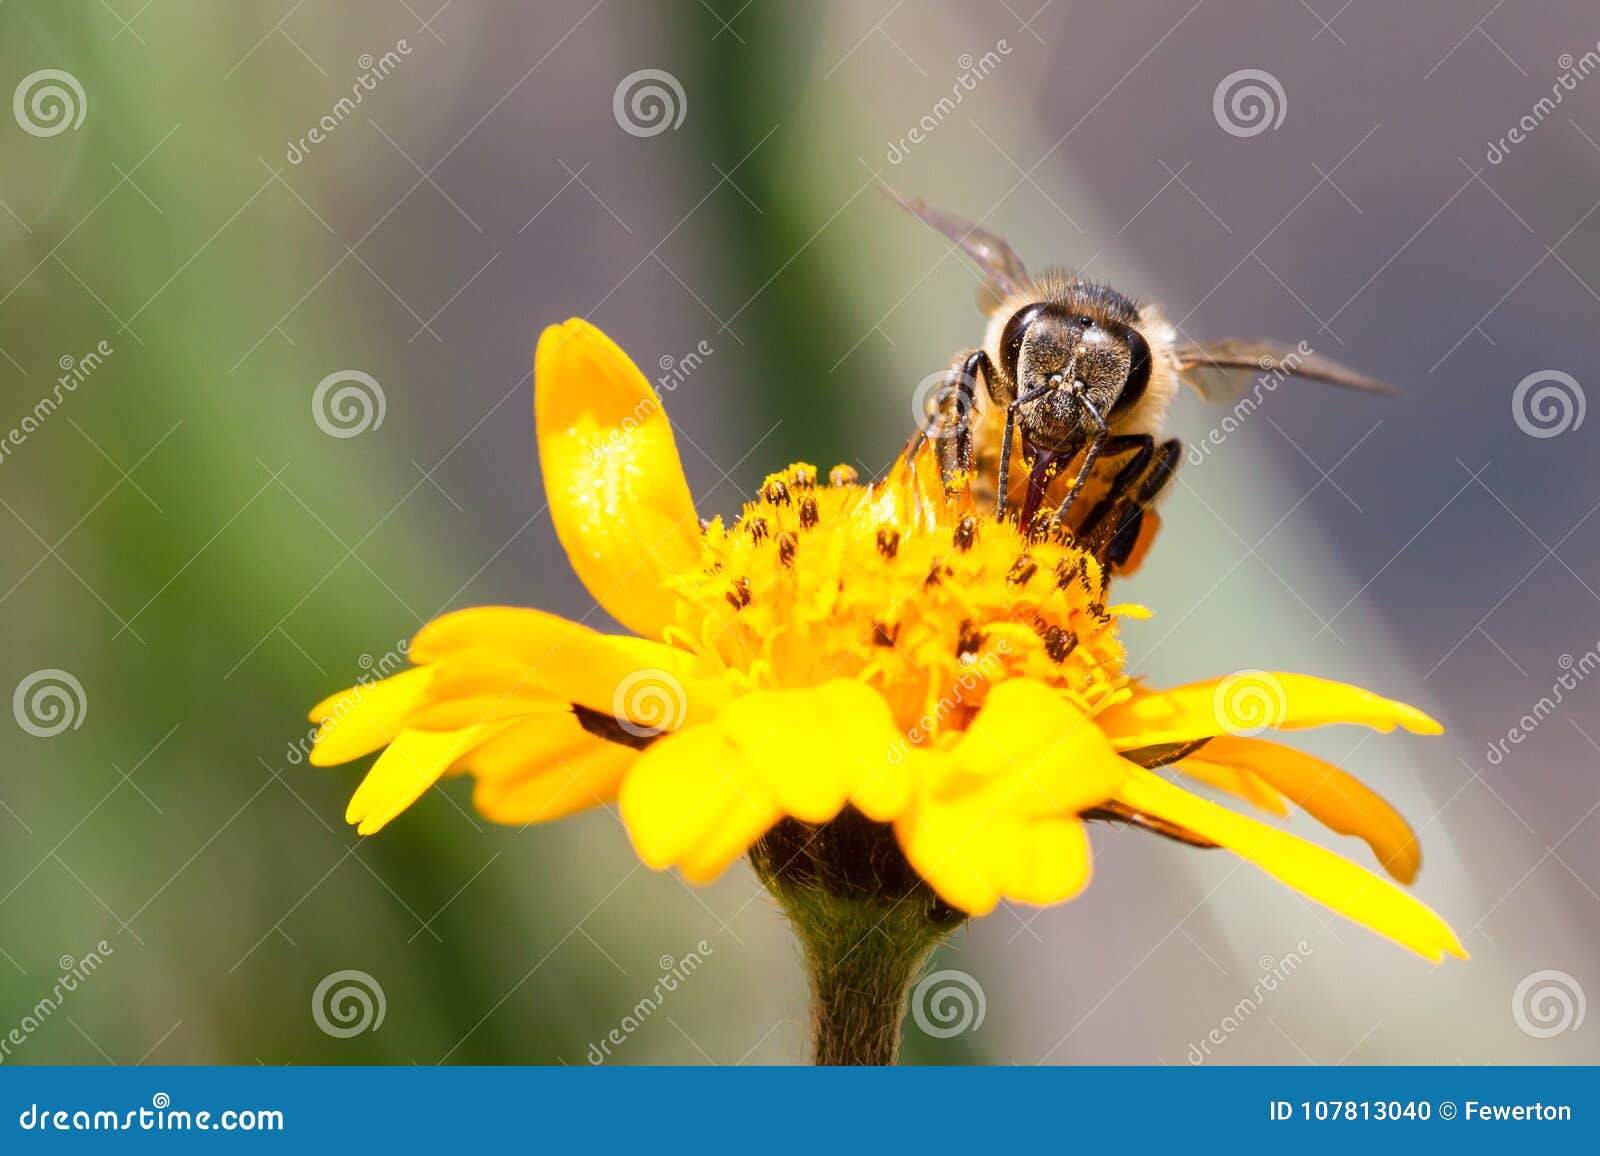 macro photography of pollinator honey bee drinking nectar from yellow wild flower